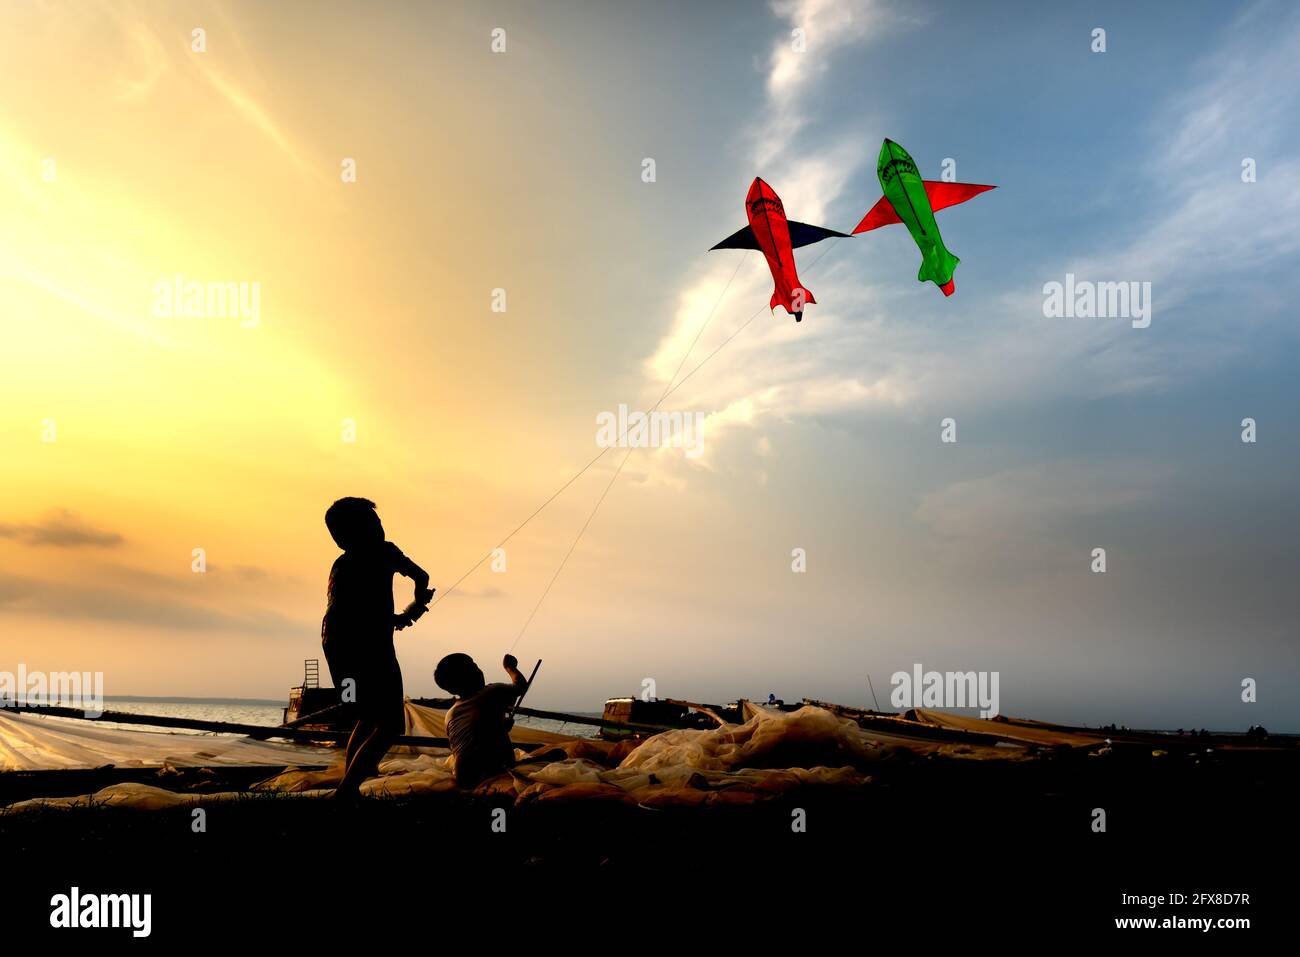 Fishing village children play kite flying at sunset, silhouette